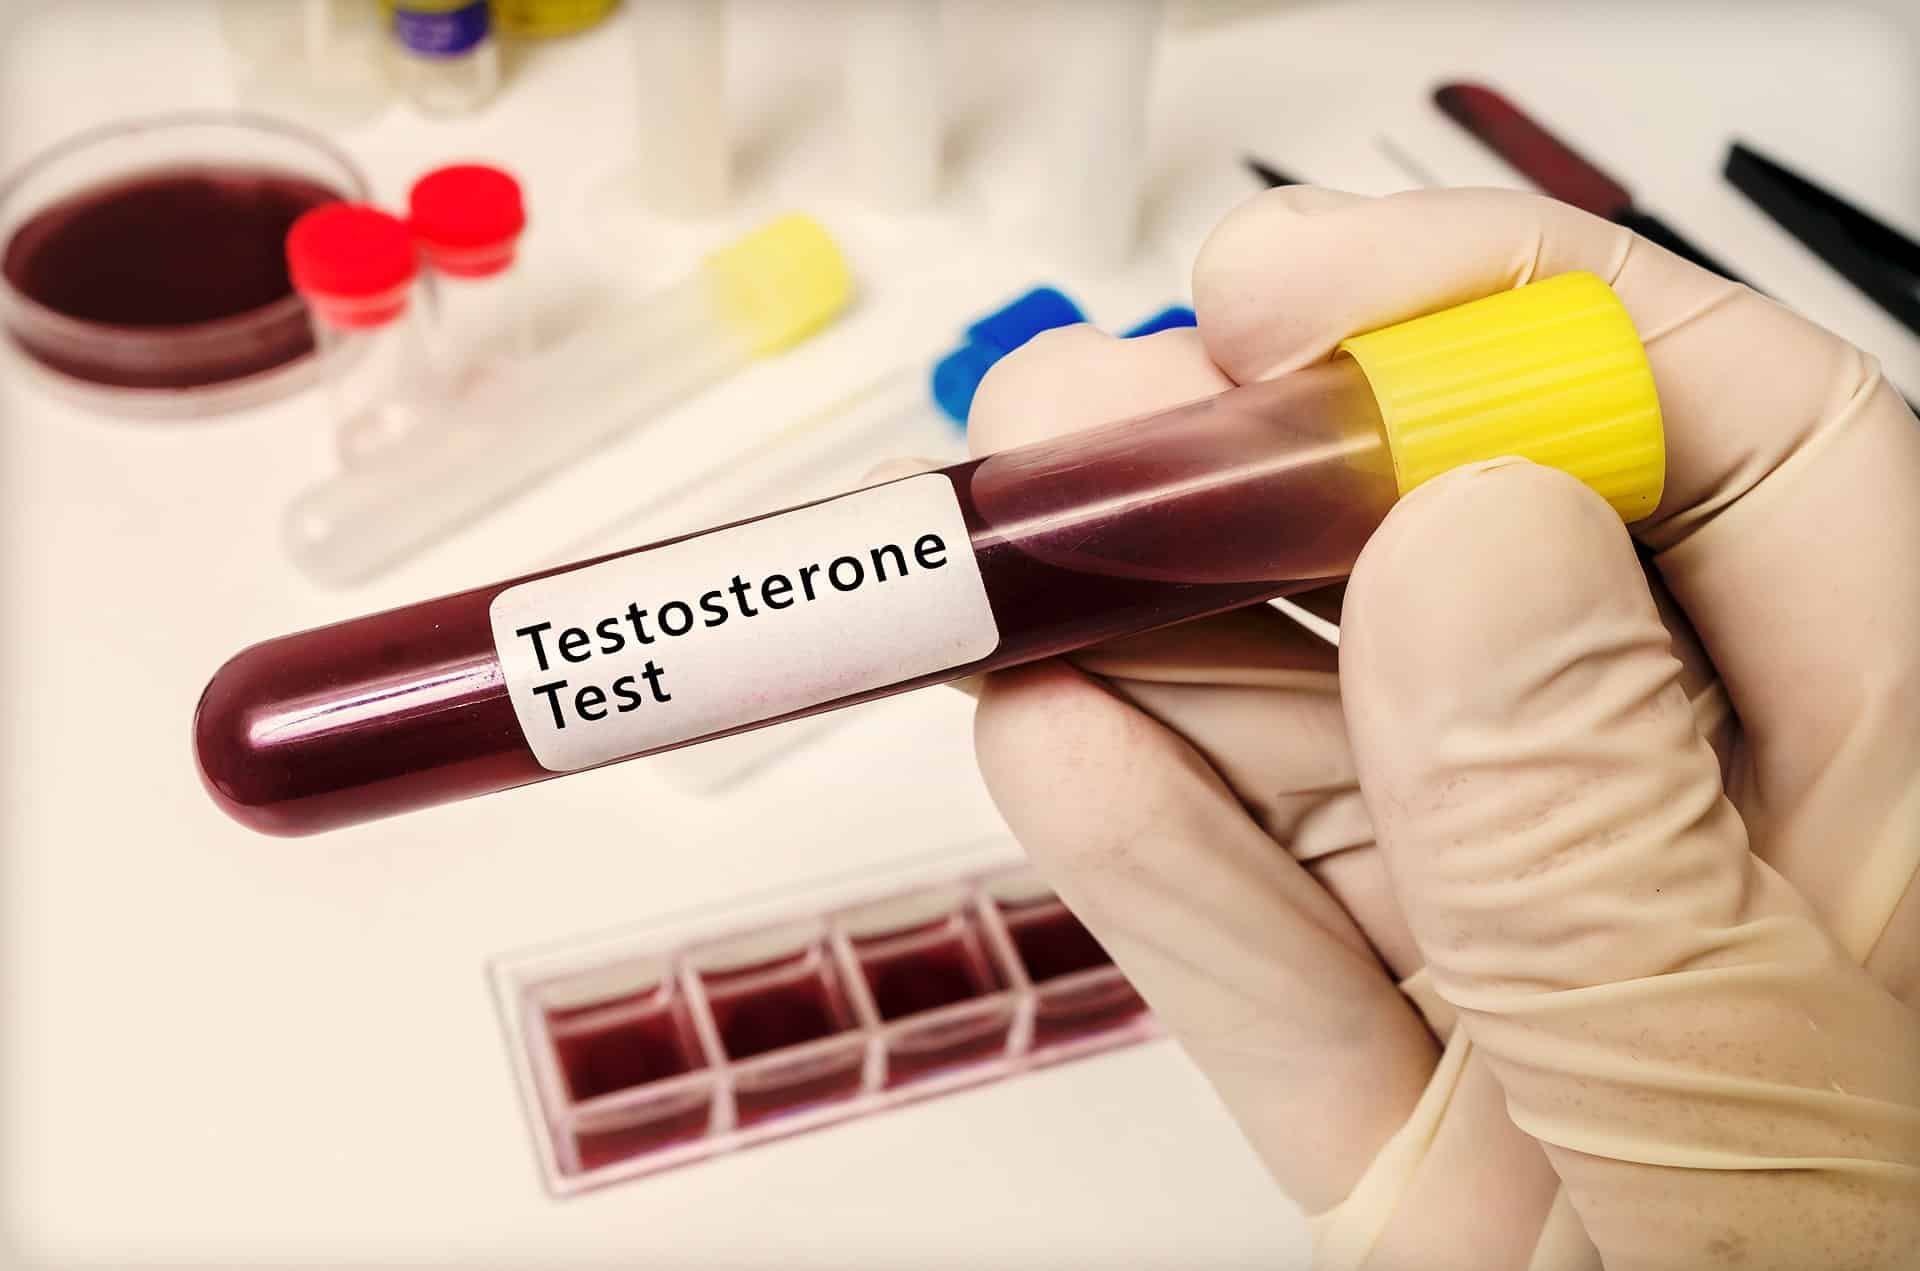 Testosterone test kit home blood test